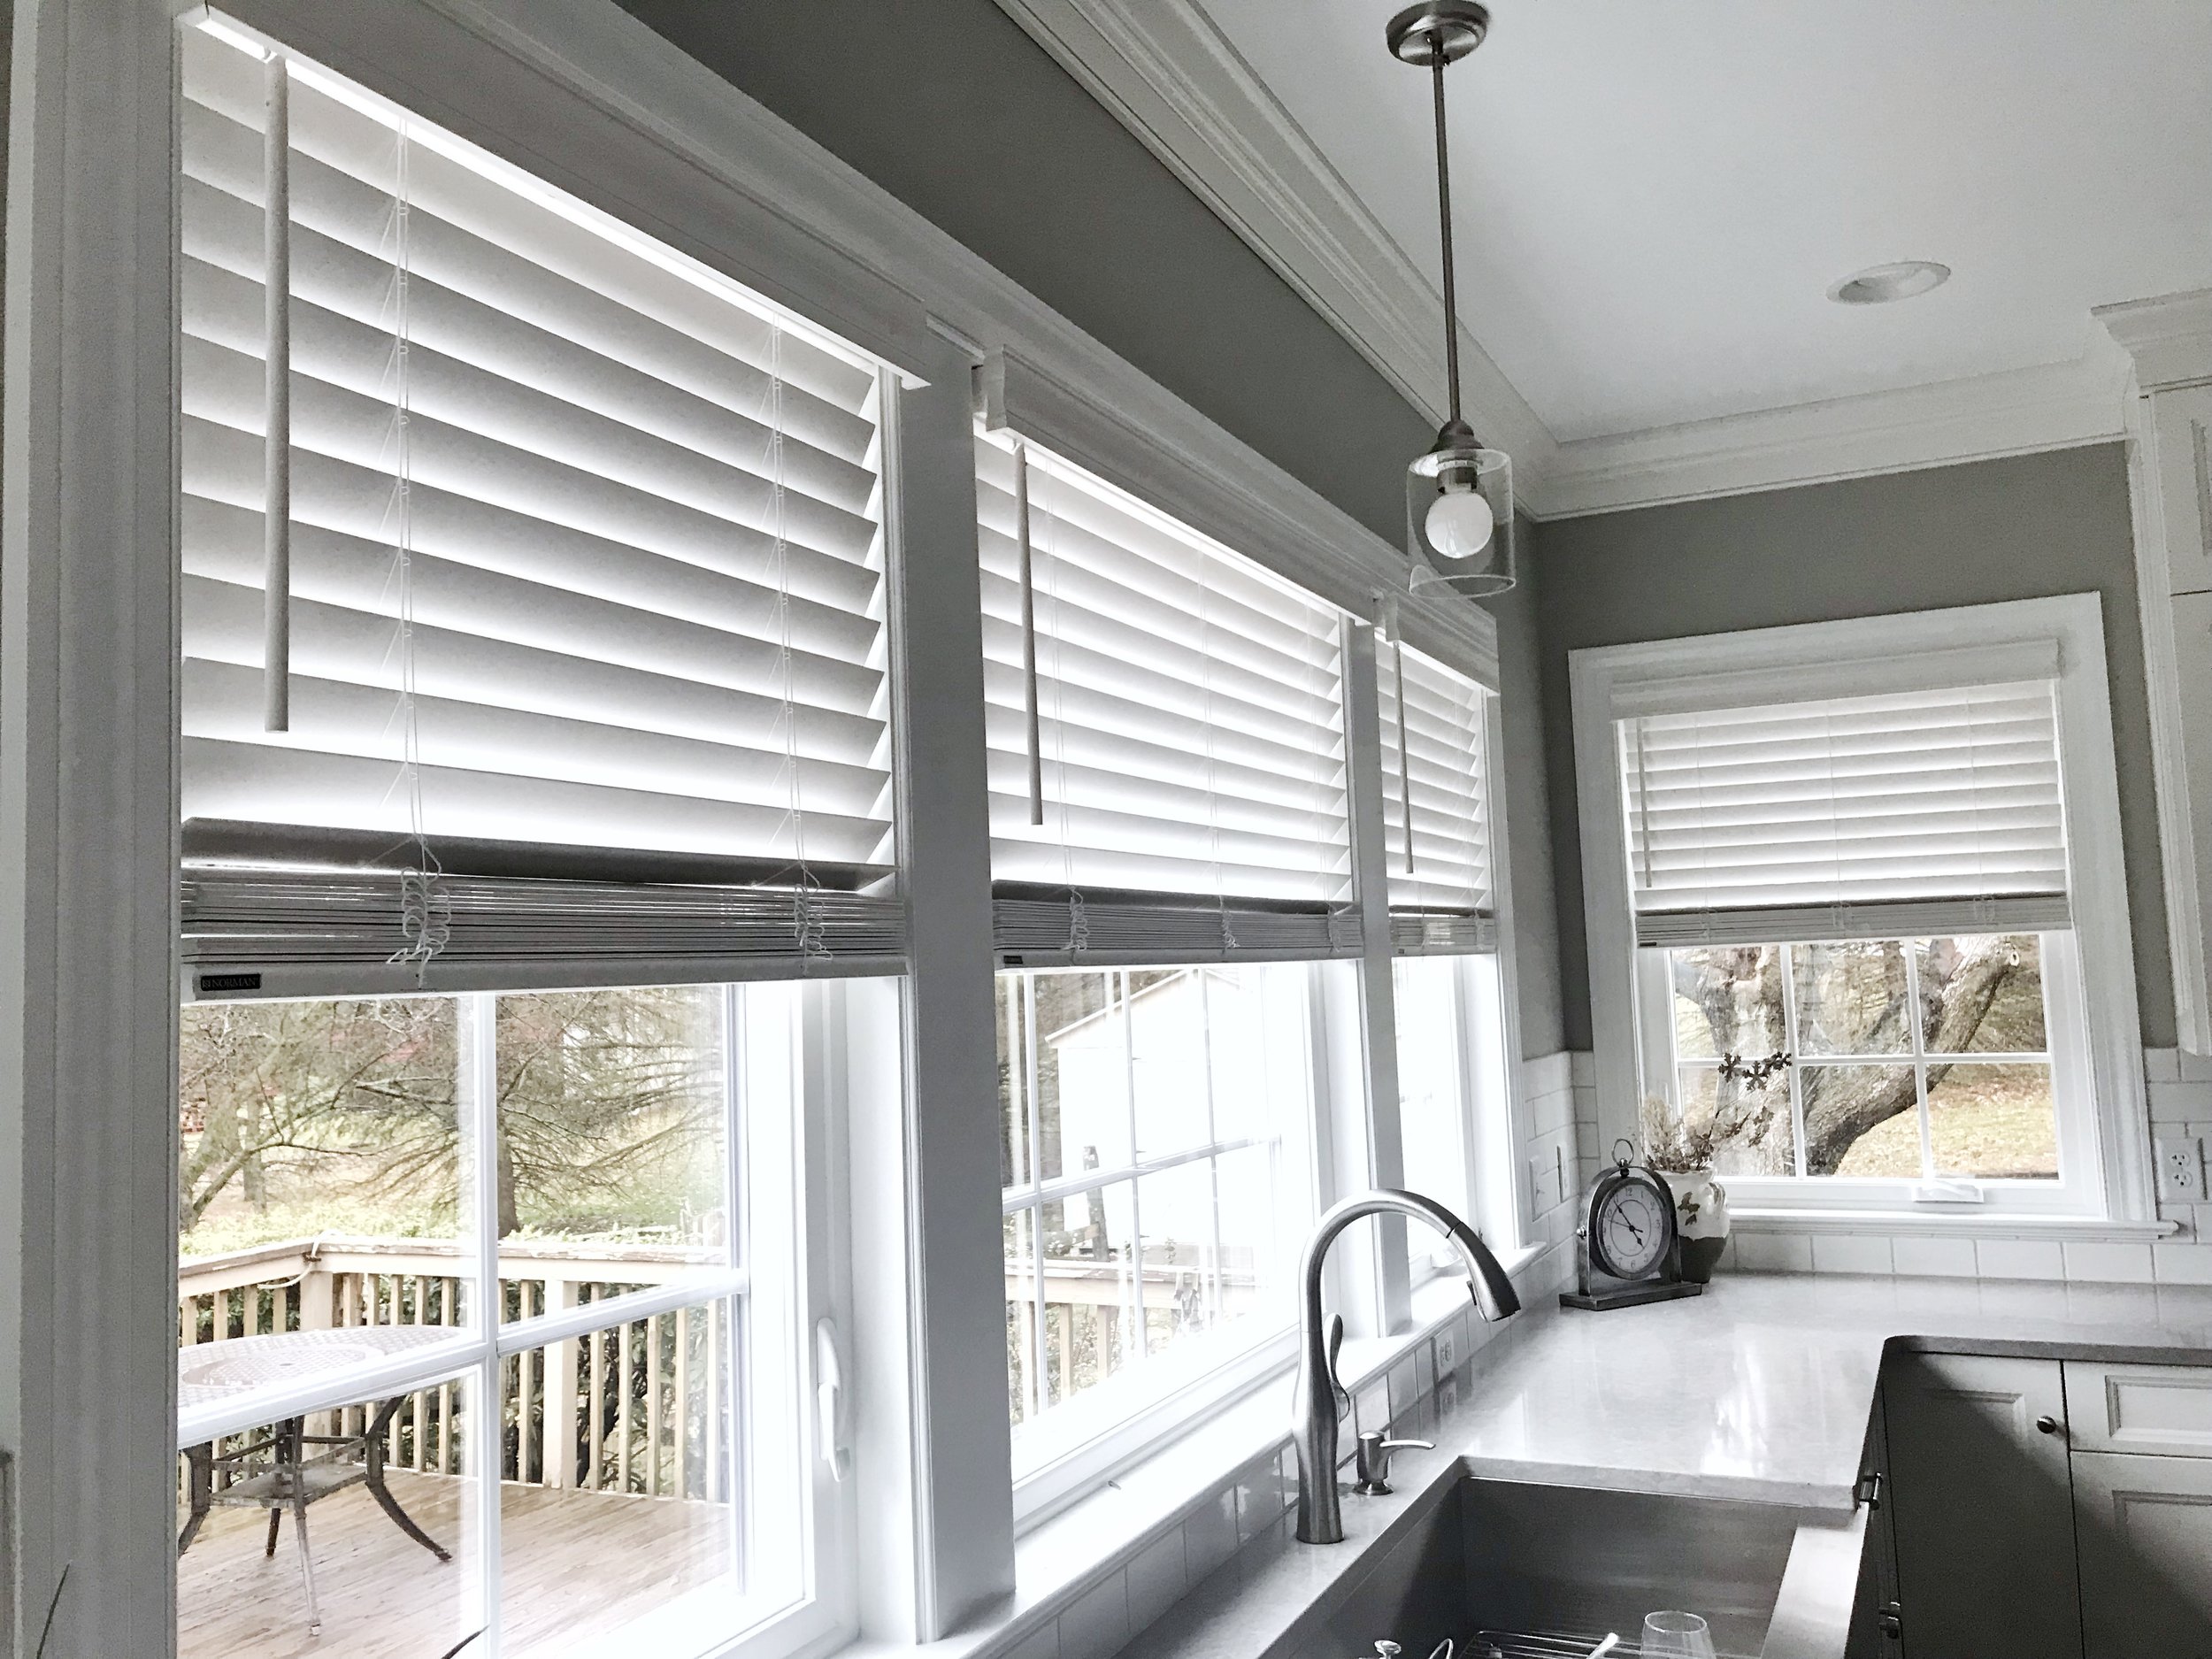 3rdGenBlinds custom white window blinds in kitchen